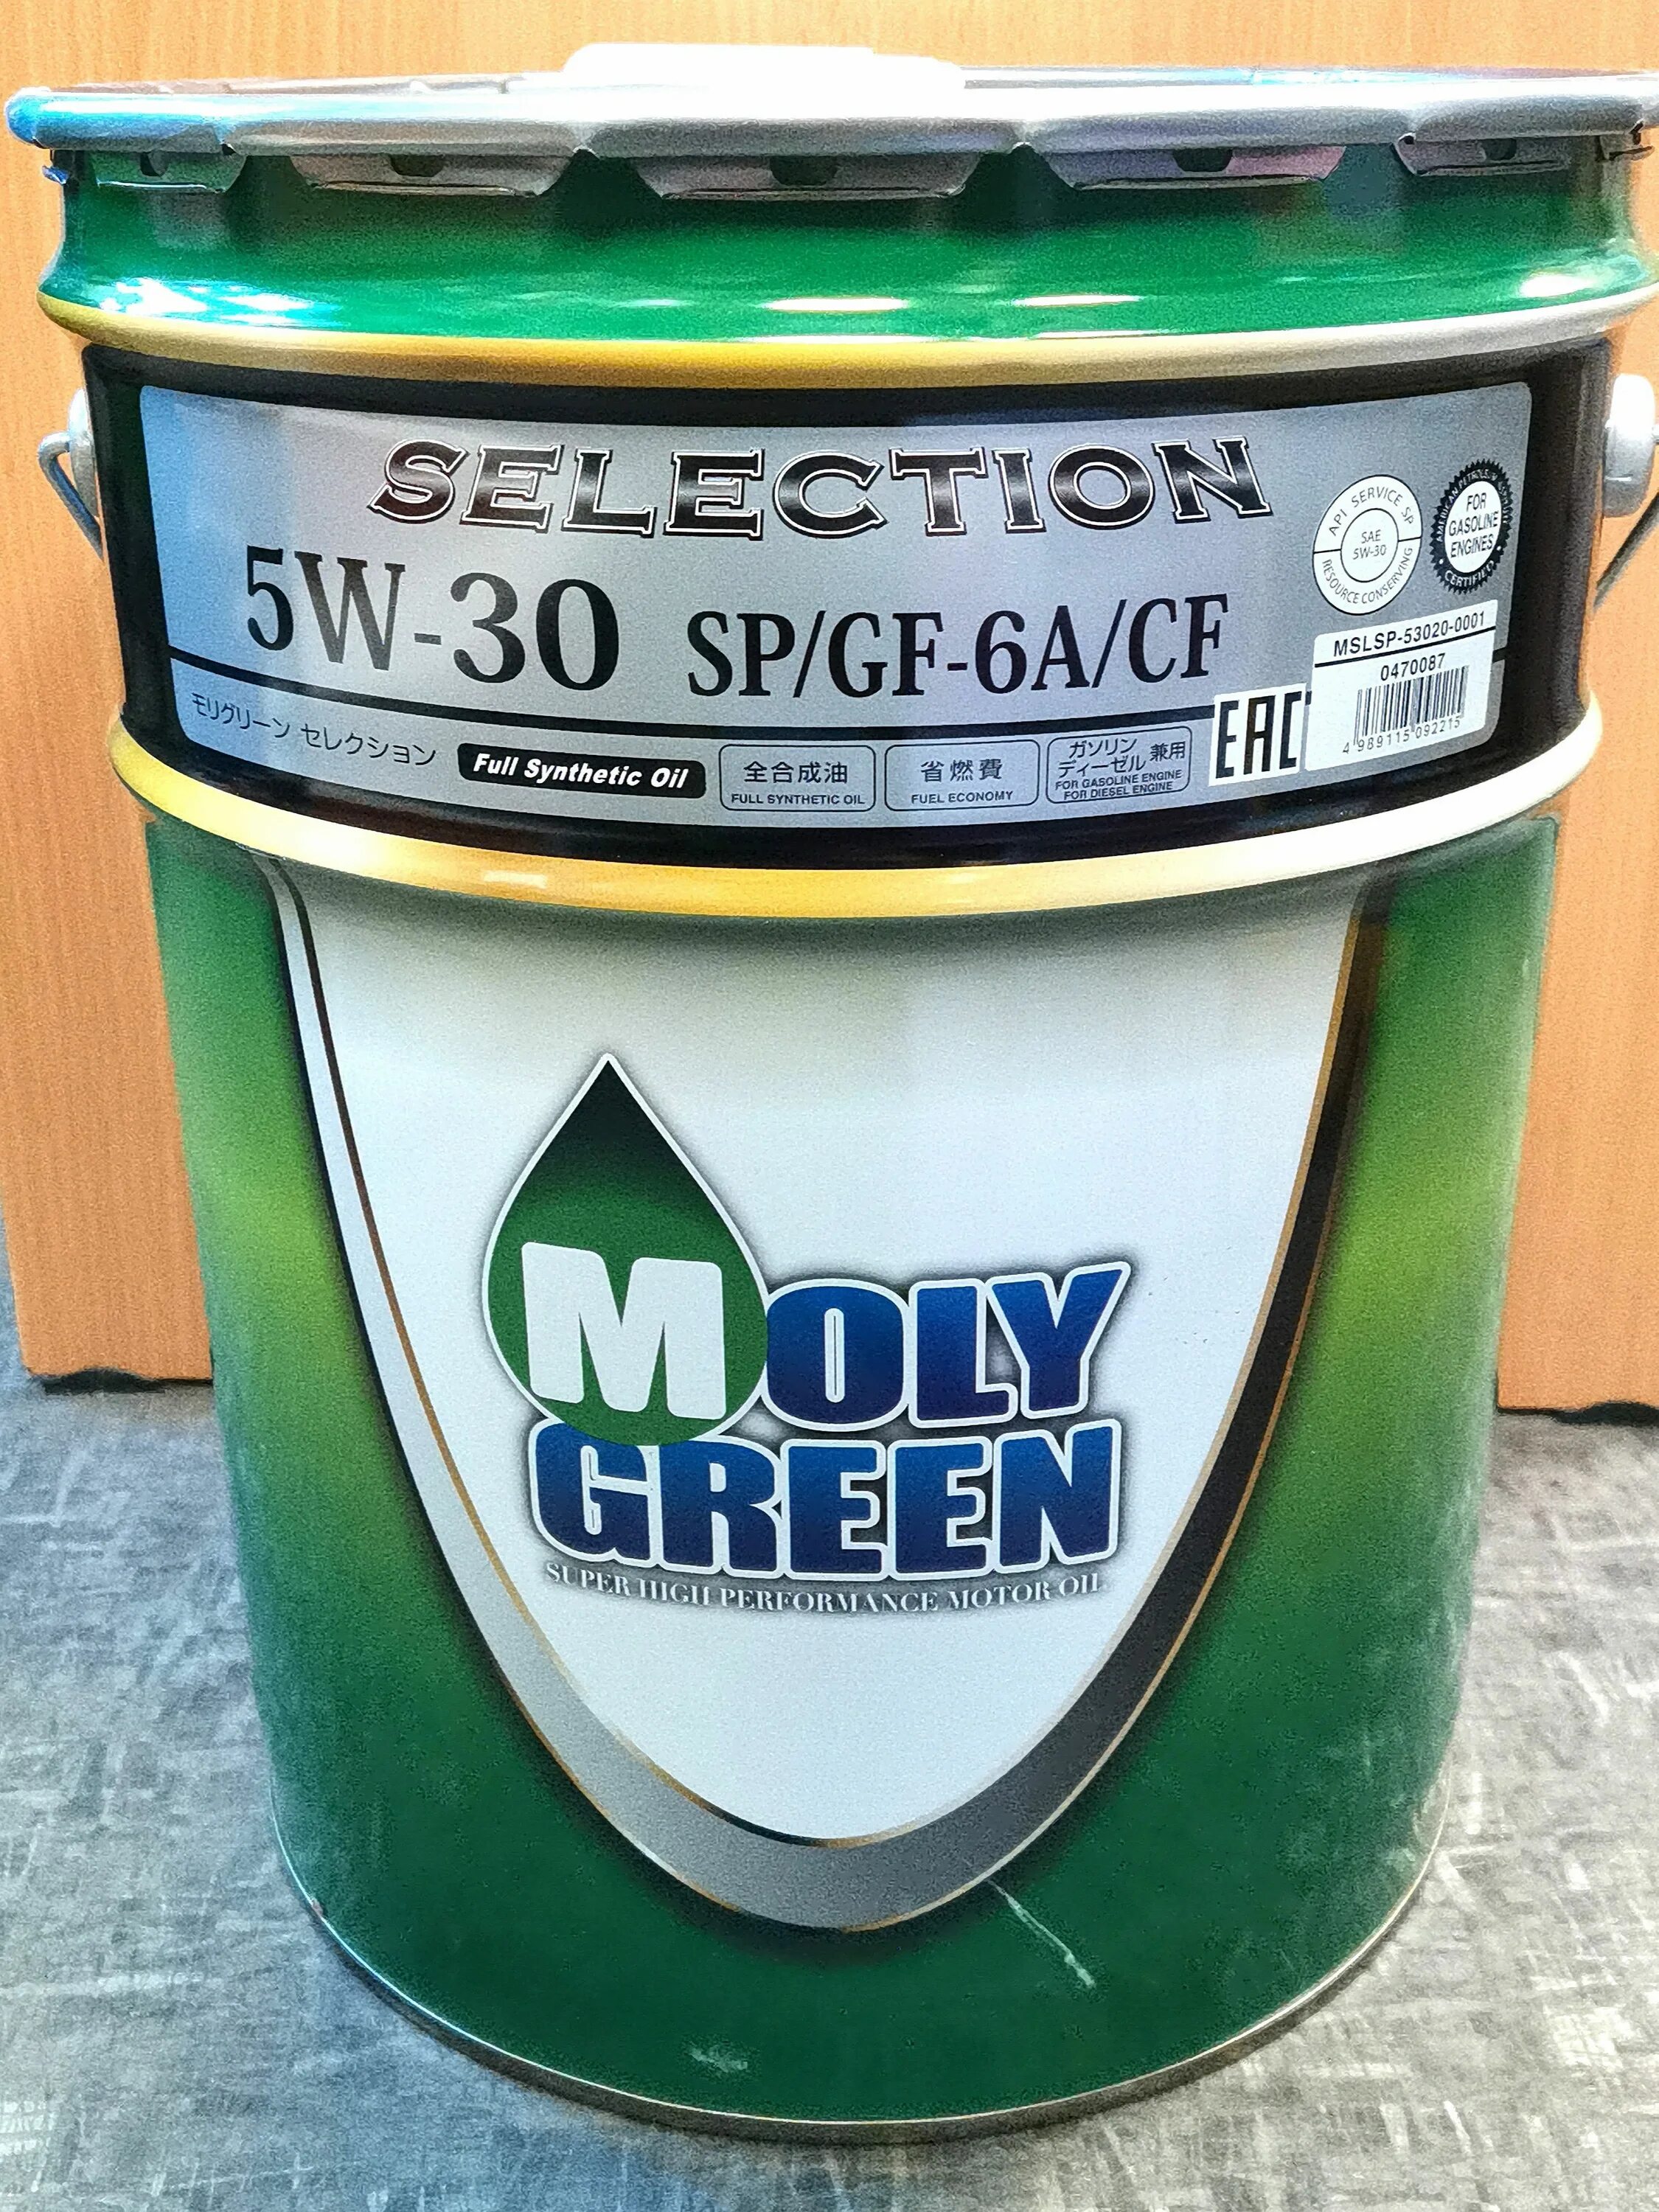 Масло молли грин 5w30. Moly Green super High Performance Motor Oil 5w- 30 SP/gf-6a/CF. Японское моторное масло Moly Green. Молли Грин масло. Масло Moly Green крышка.